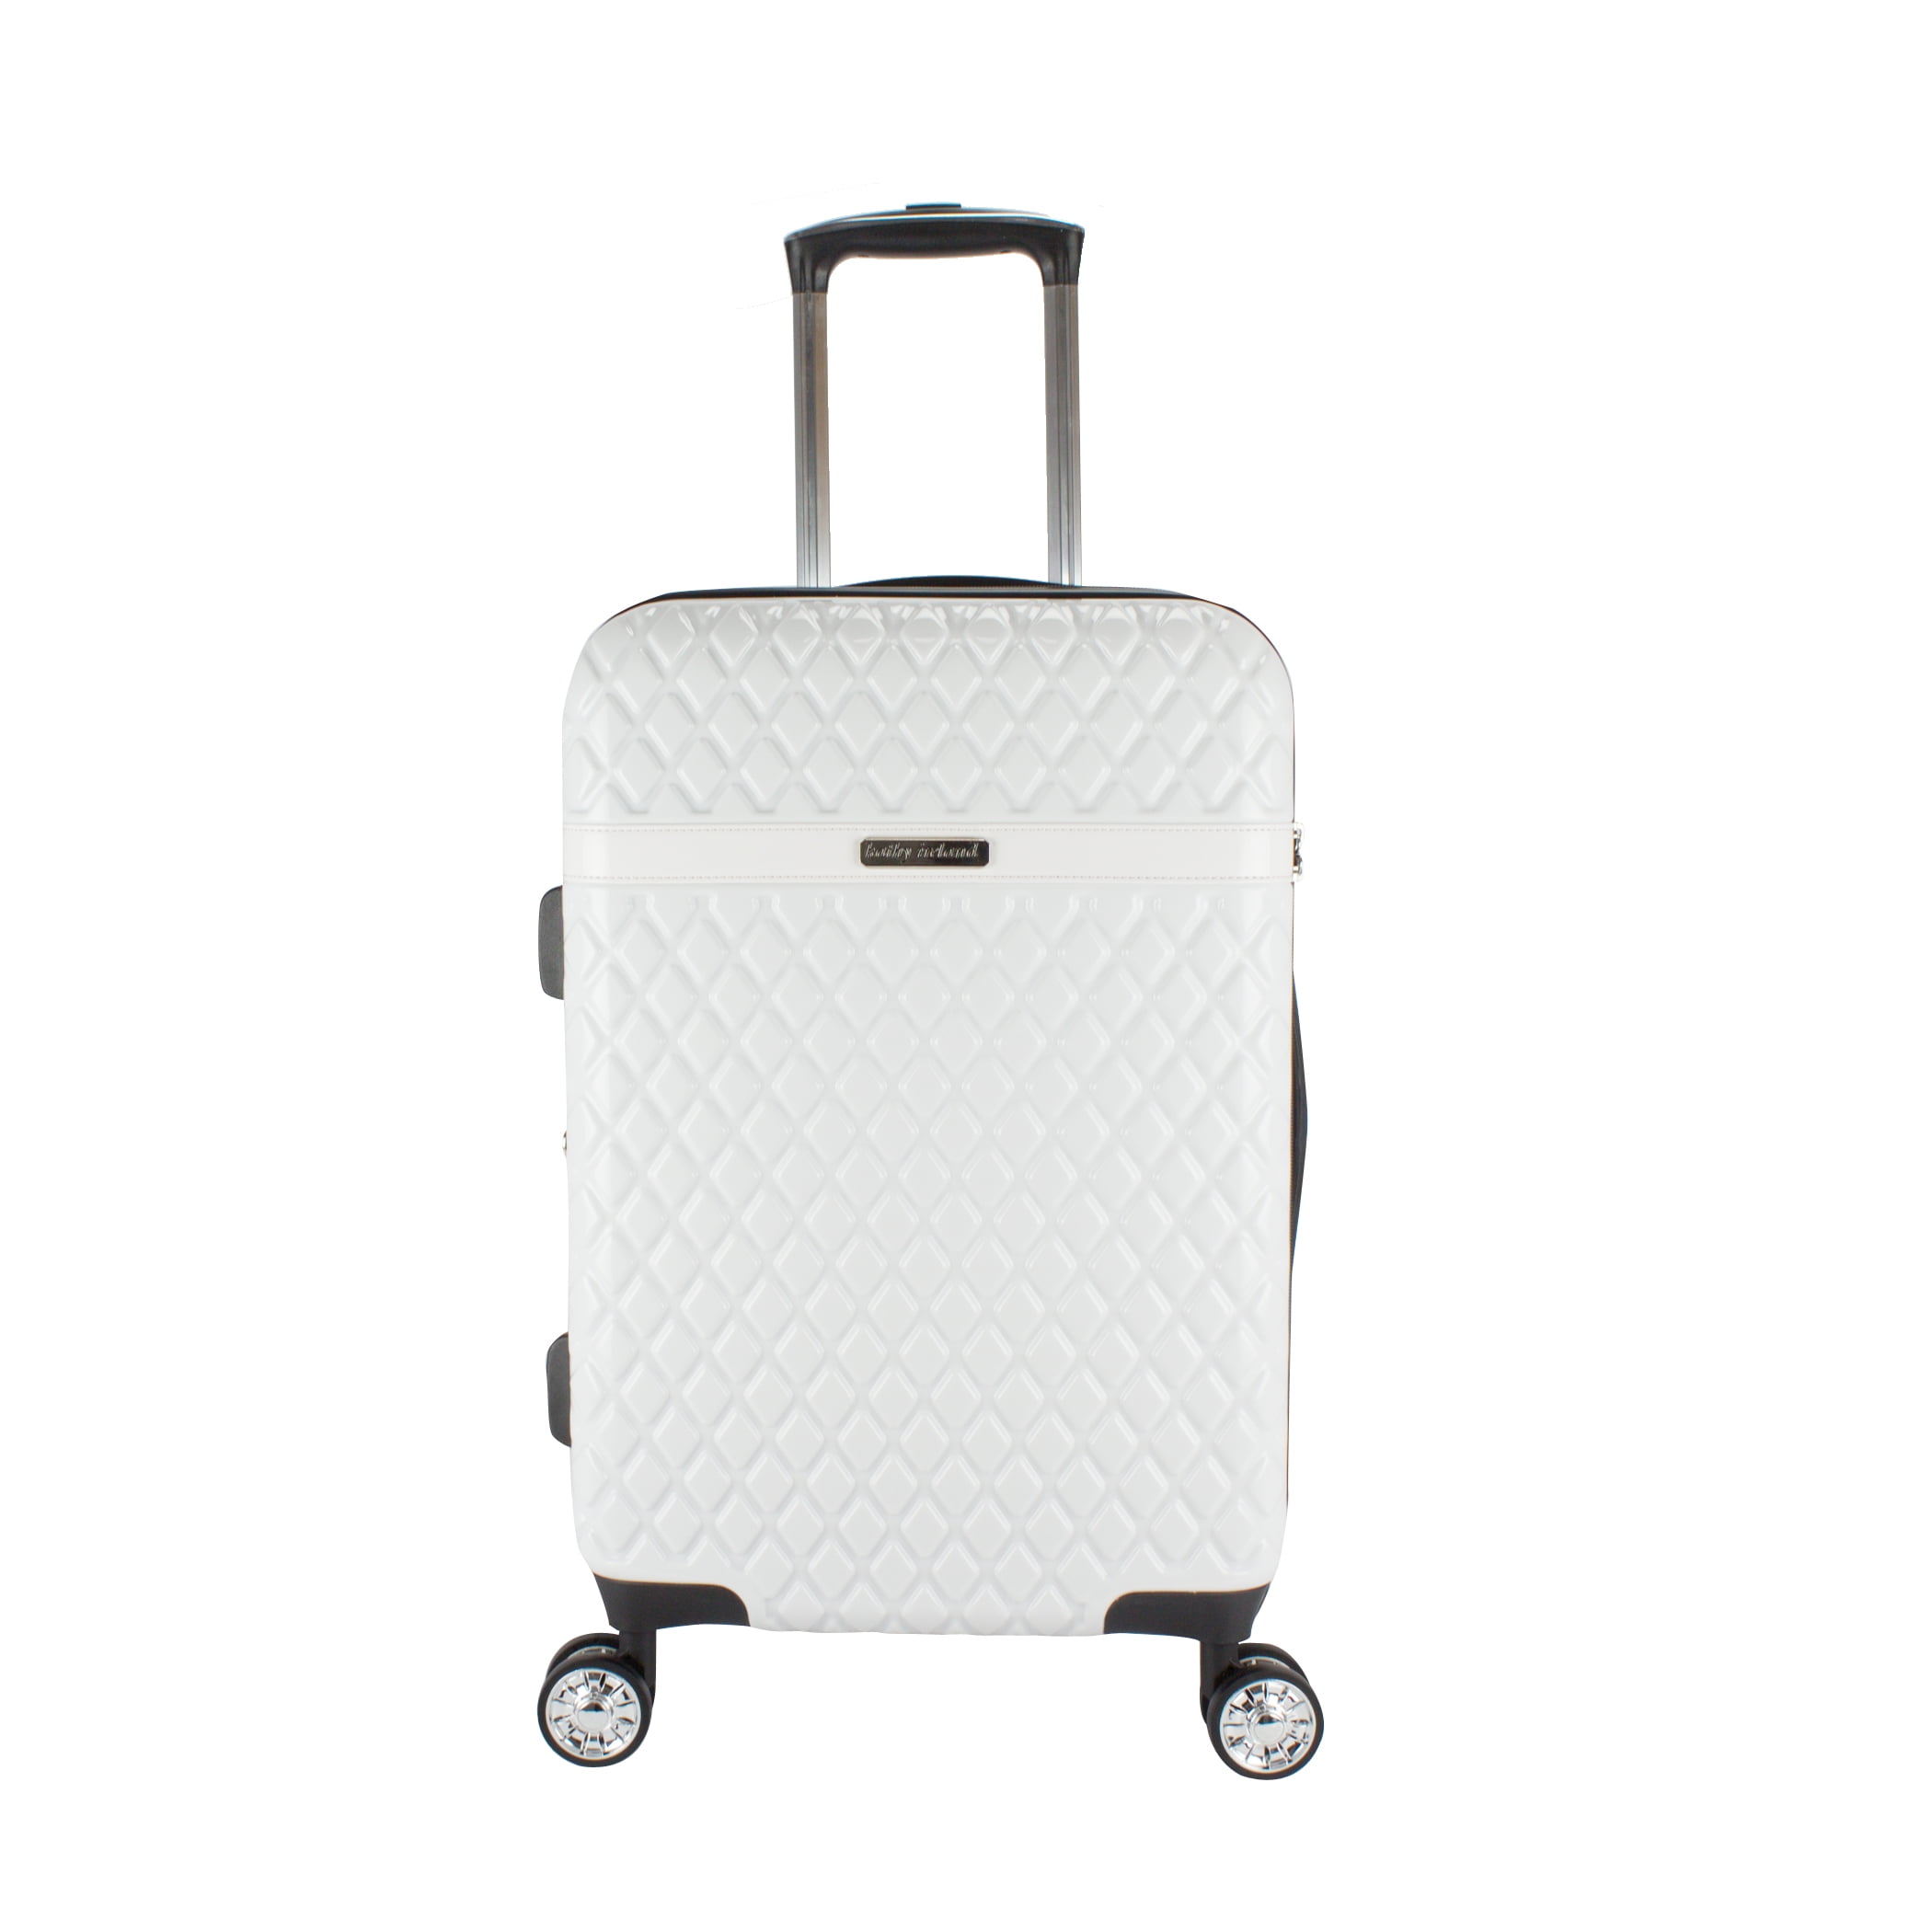 Buy Kathy Ireland Yasmine 22 Hardside Spinner Luggage Online At Lowest Price In India 753298562